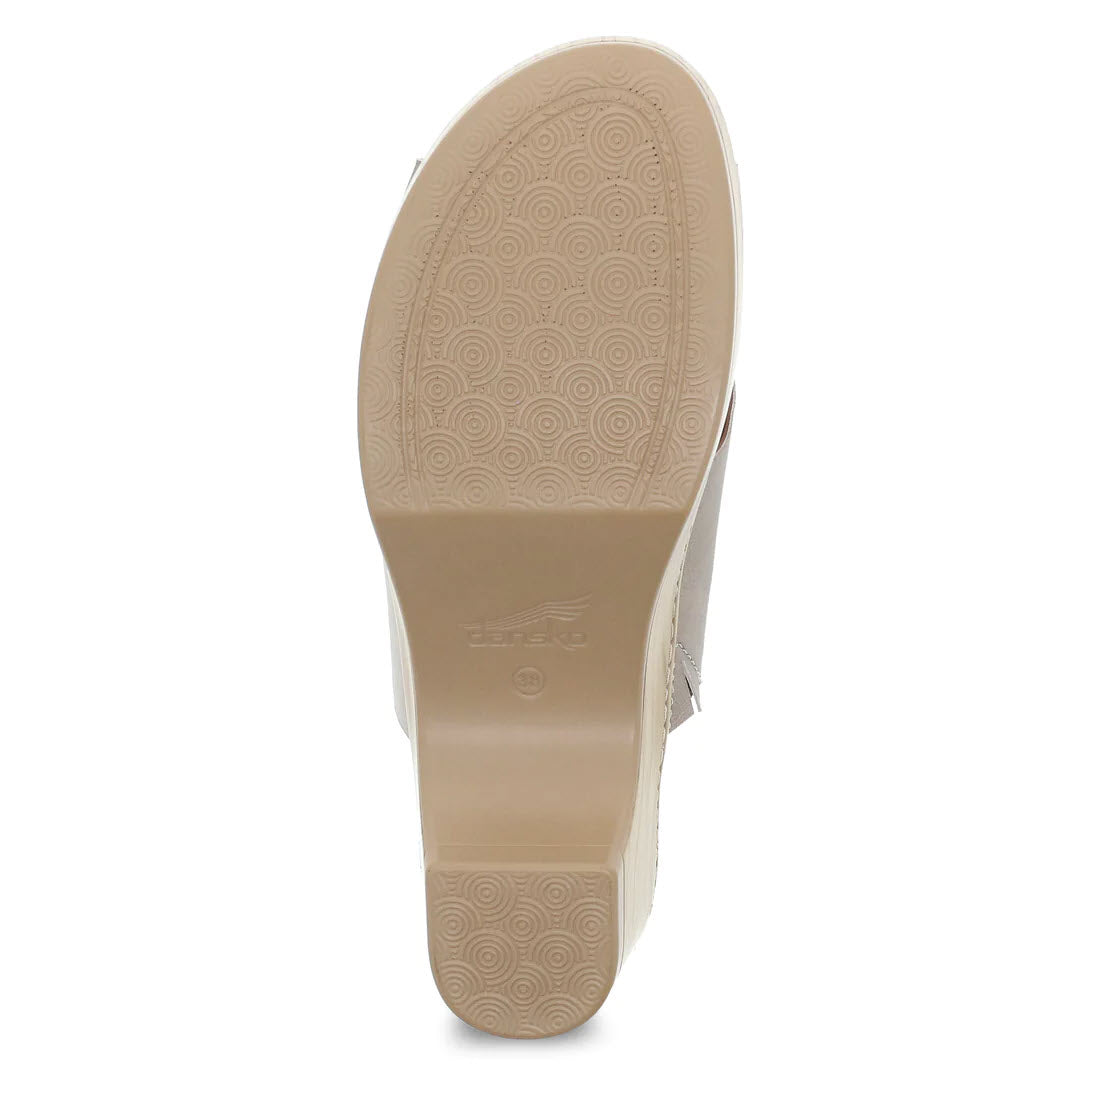 Sole of a light brown Dansko Miri Sand Multi slide sandal with circular patterns and brand logo embossed near the heel.